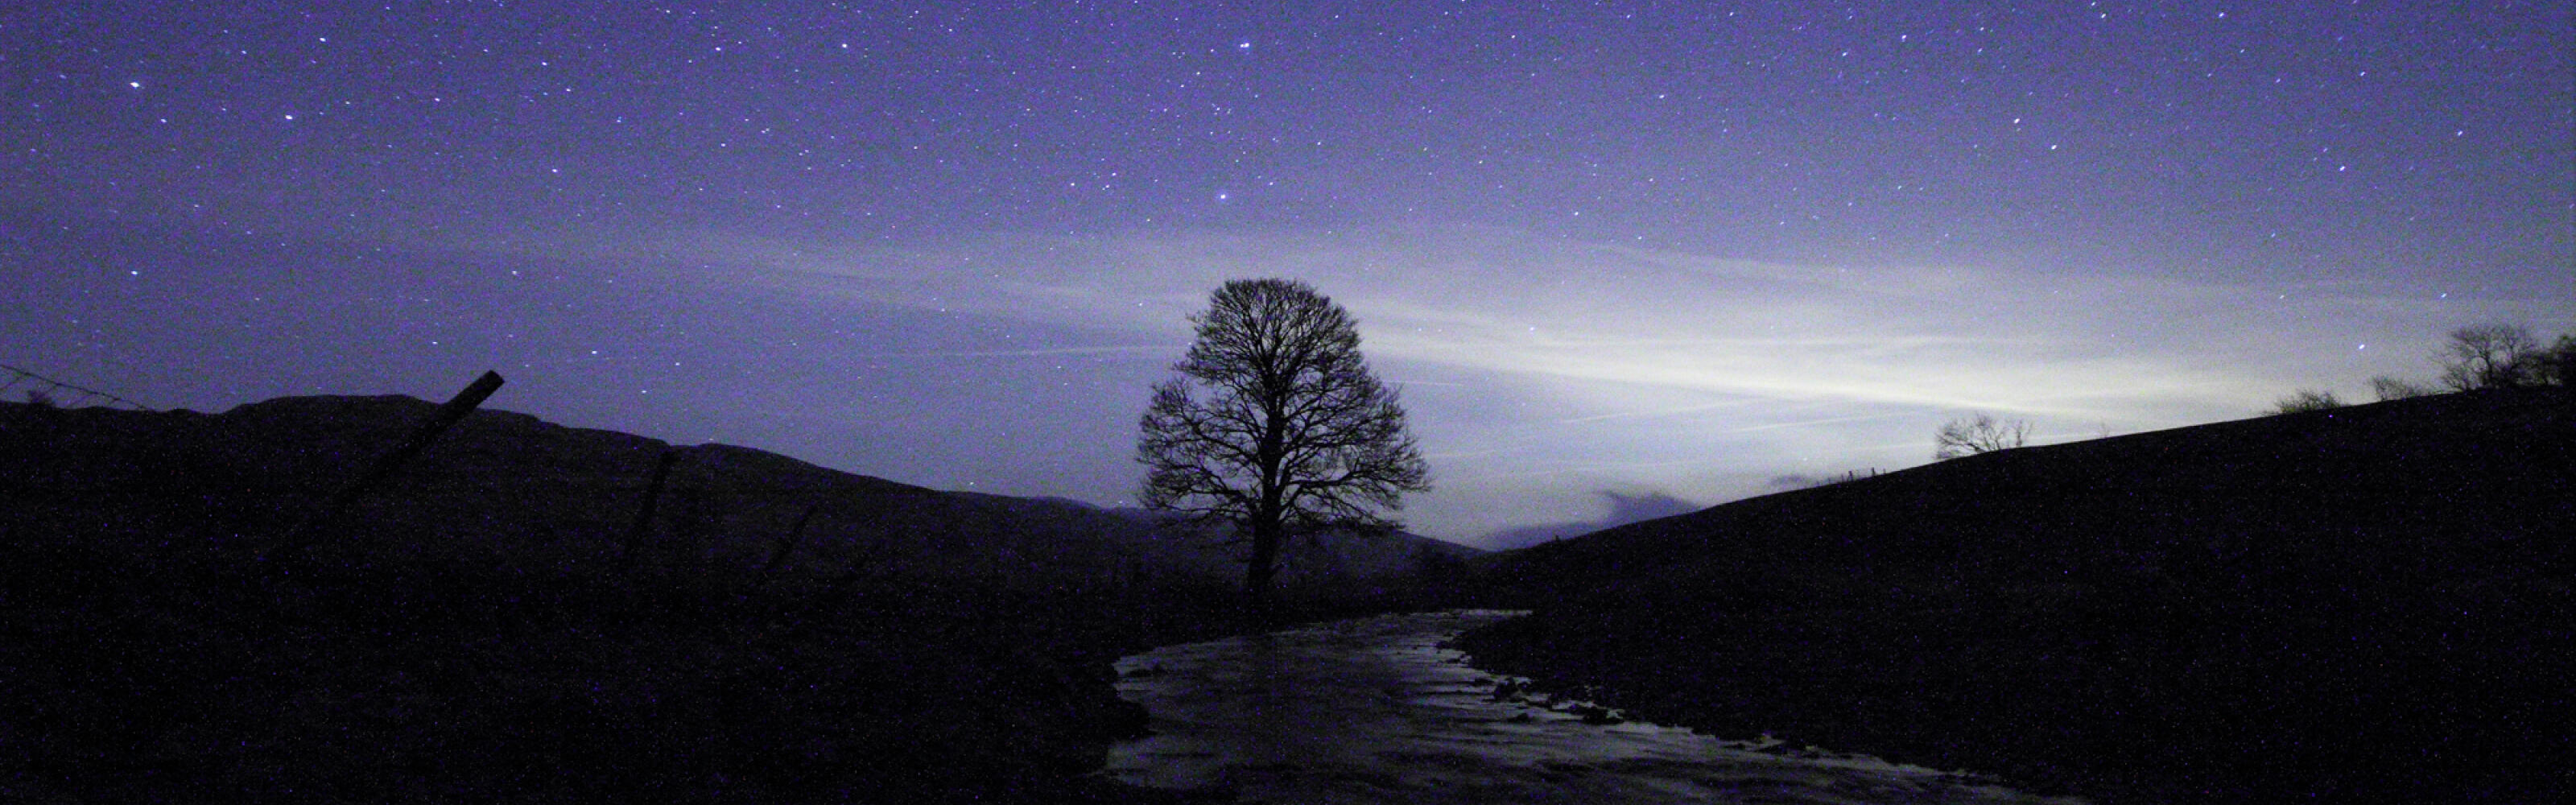 Dark Sky Destinations In Wales Visit Wales